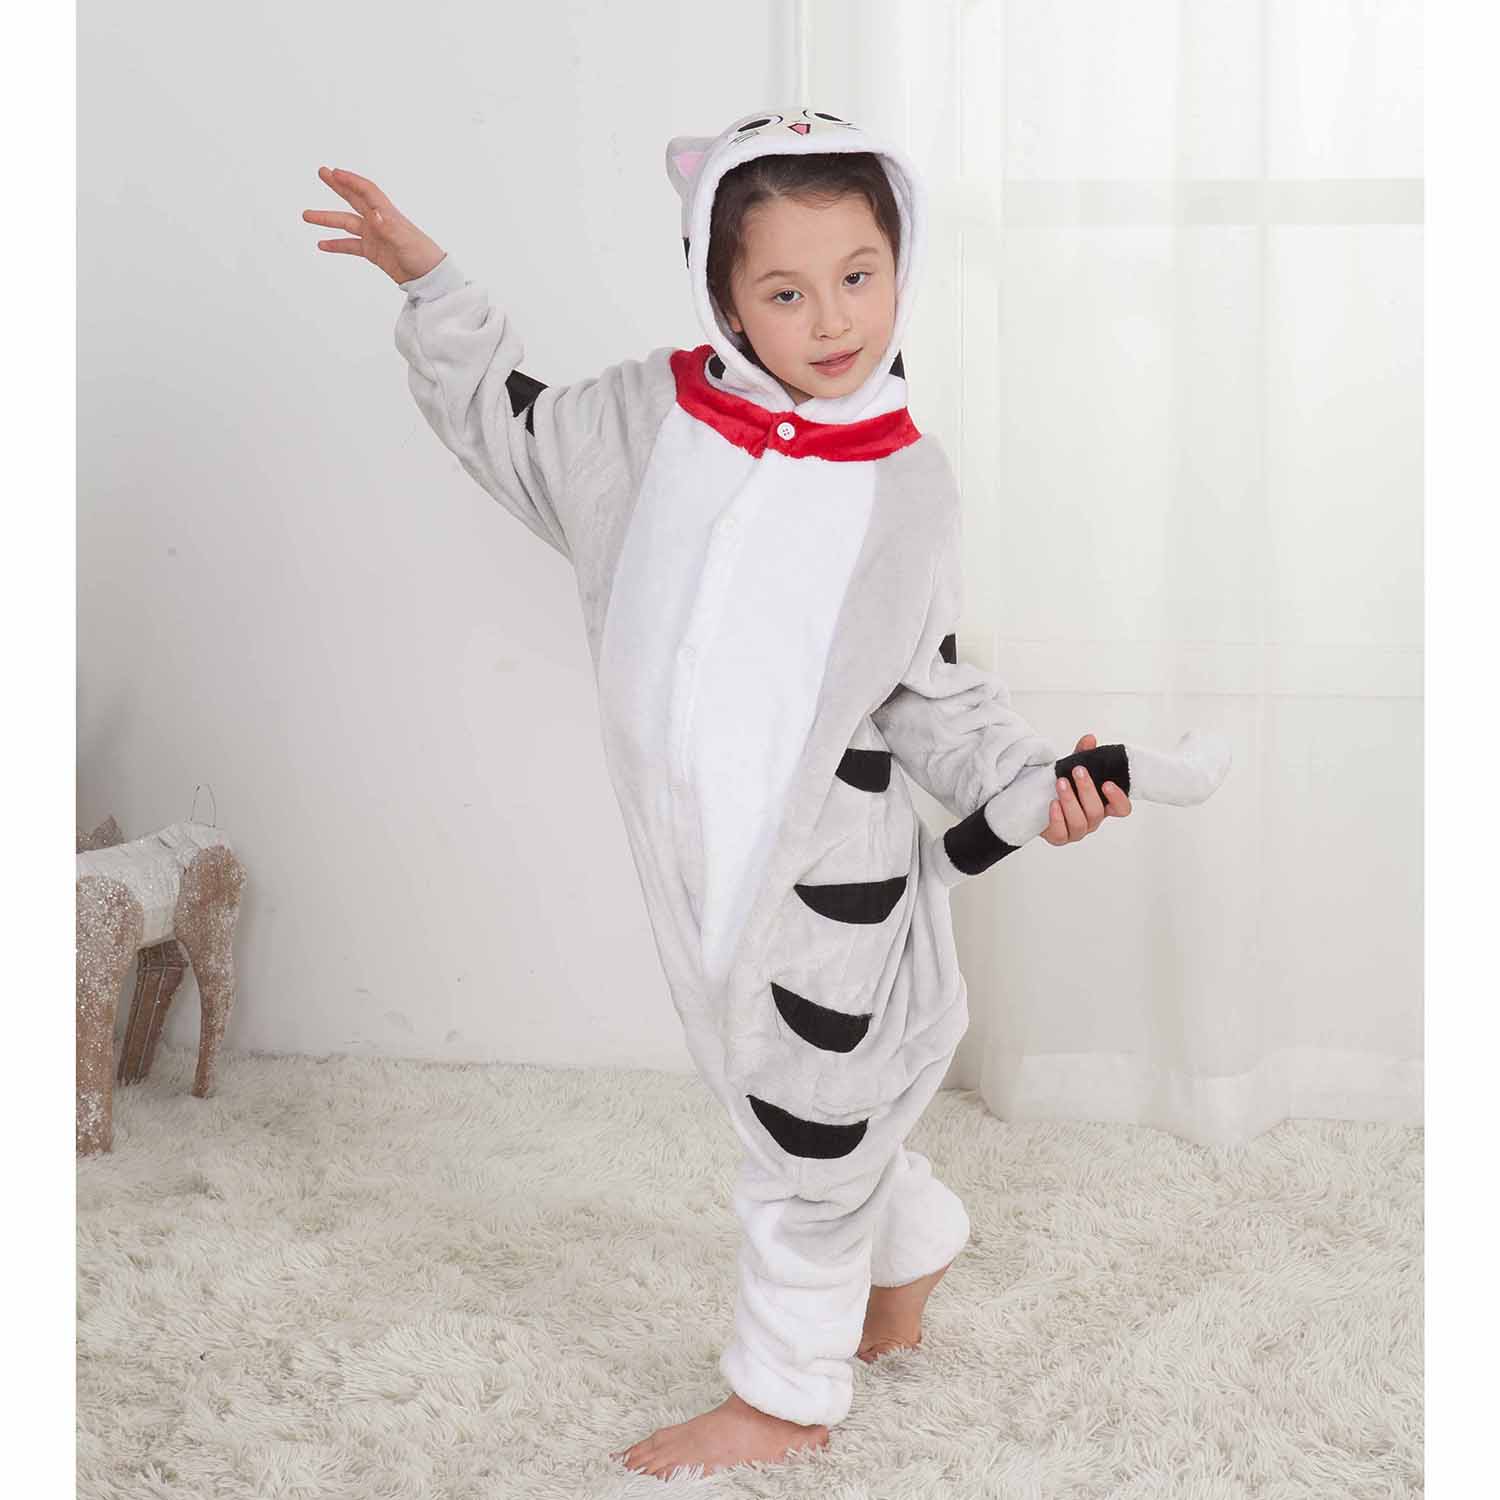 Gray Pusheen Onesie Kids Animal Pajamas Kigurumi Costumes - Allonesie